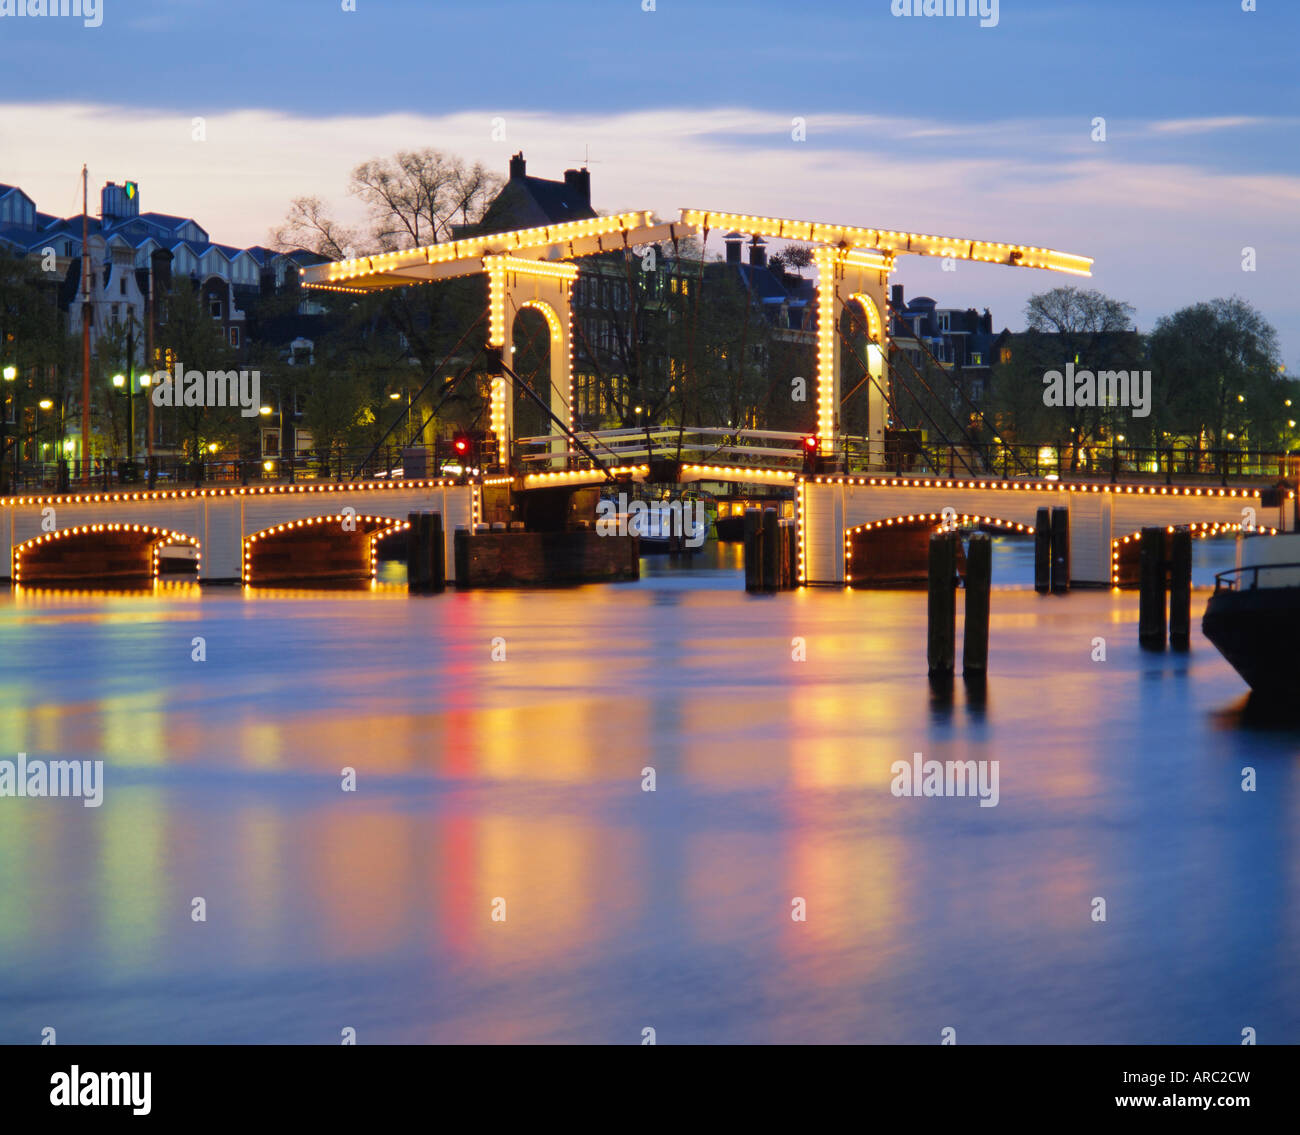 Magere Brug, the Skinny Bridge, Amsterdam, Netherlands Stock Photo